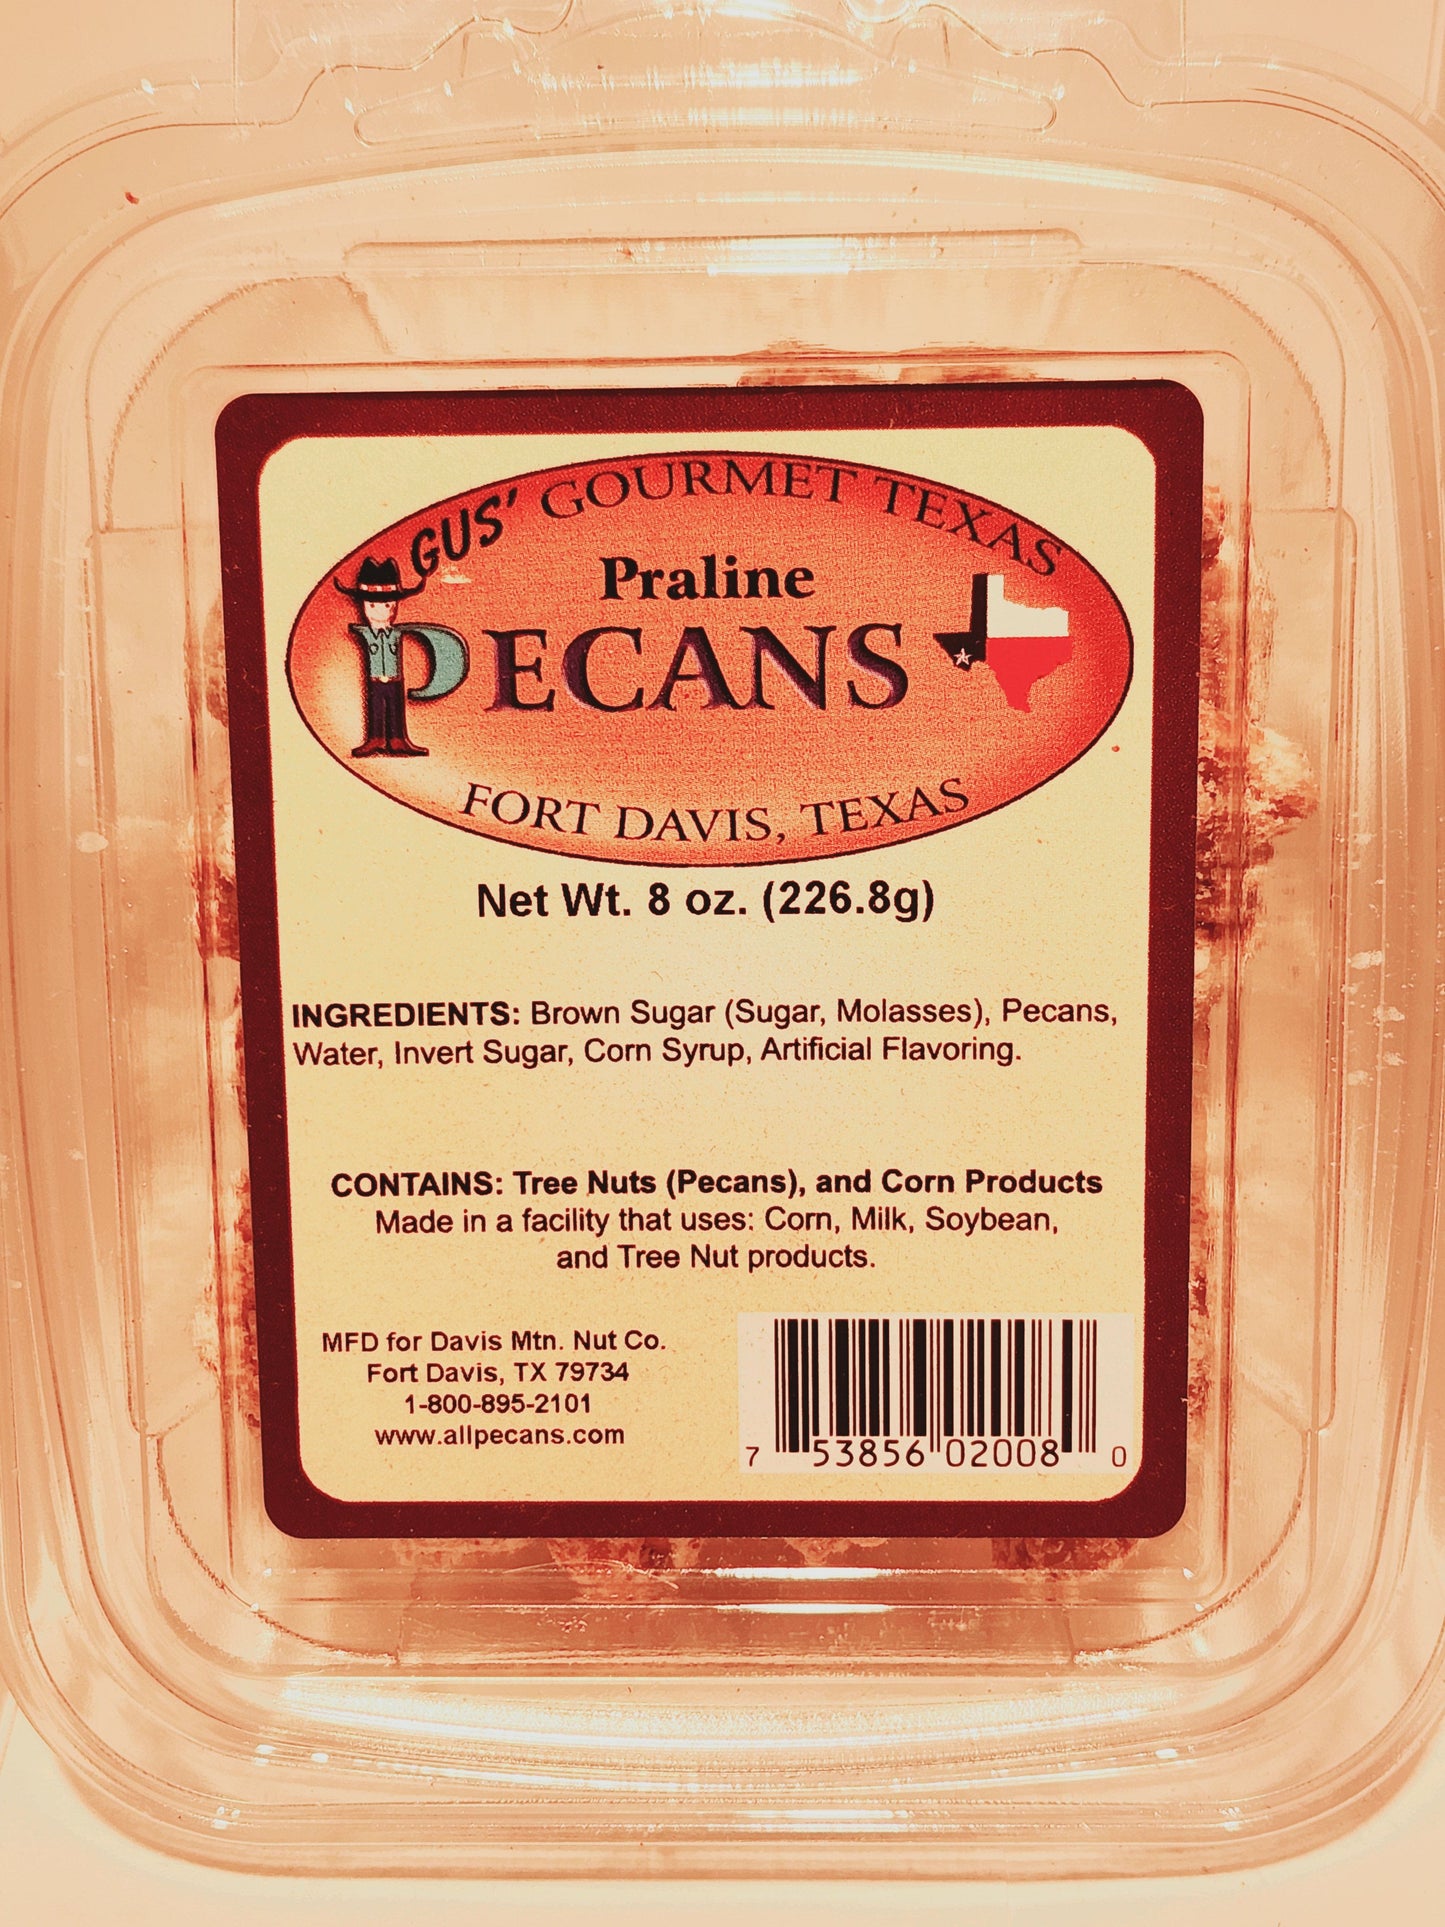 Praline Flavored-Davis Mountains Nut Company